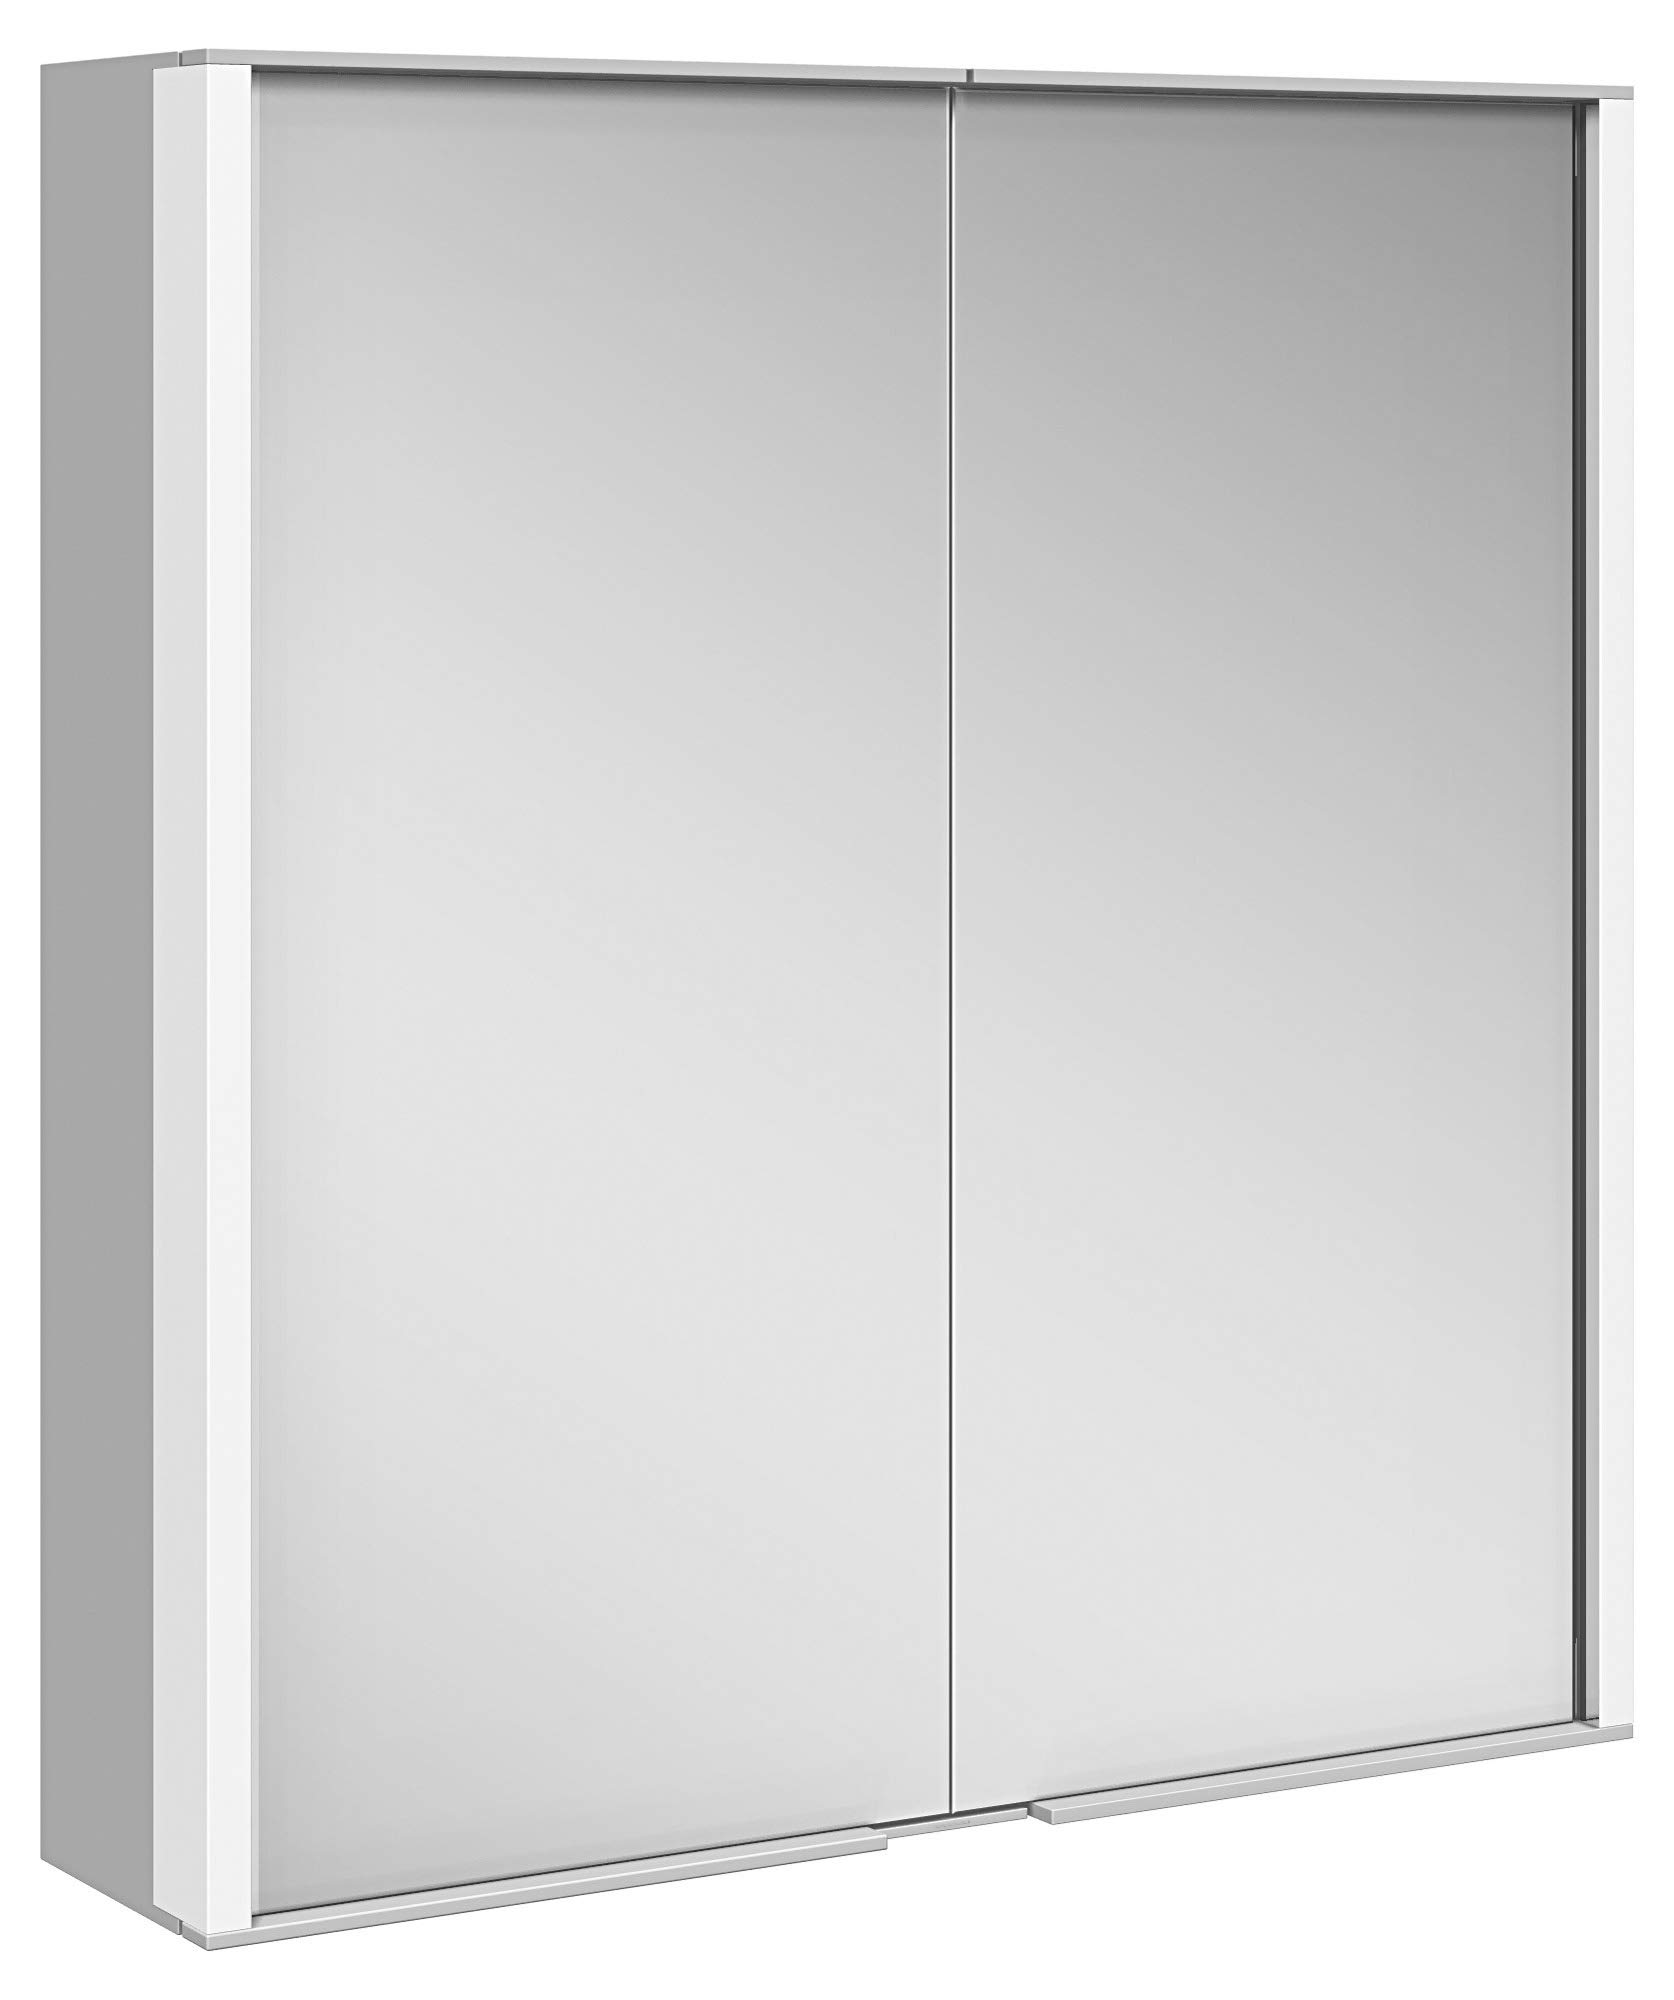 Keuco Spiegel-Schrank mit Variabler LED-Beleuchtung dimmbar, Badezimmer-Spiegelschrank, mit Aluminium-Korpus, mit 2 Türen, 100x70x16 cm Royal Match